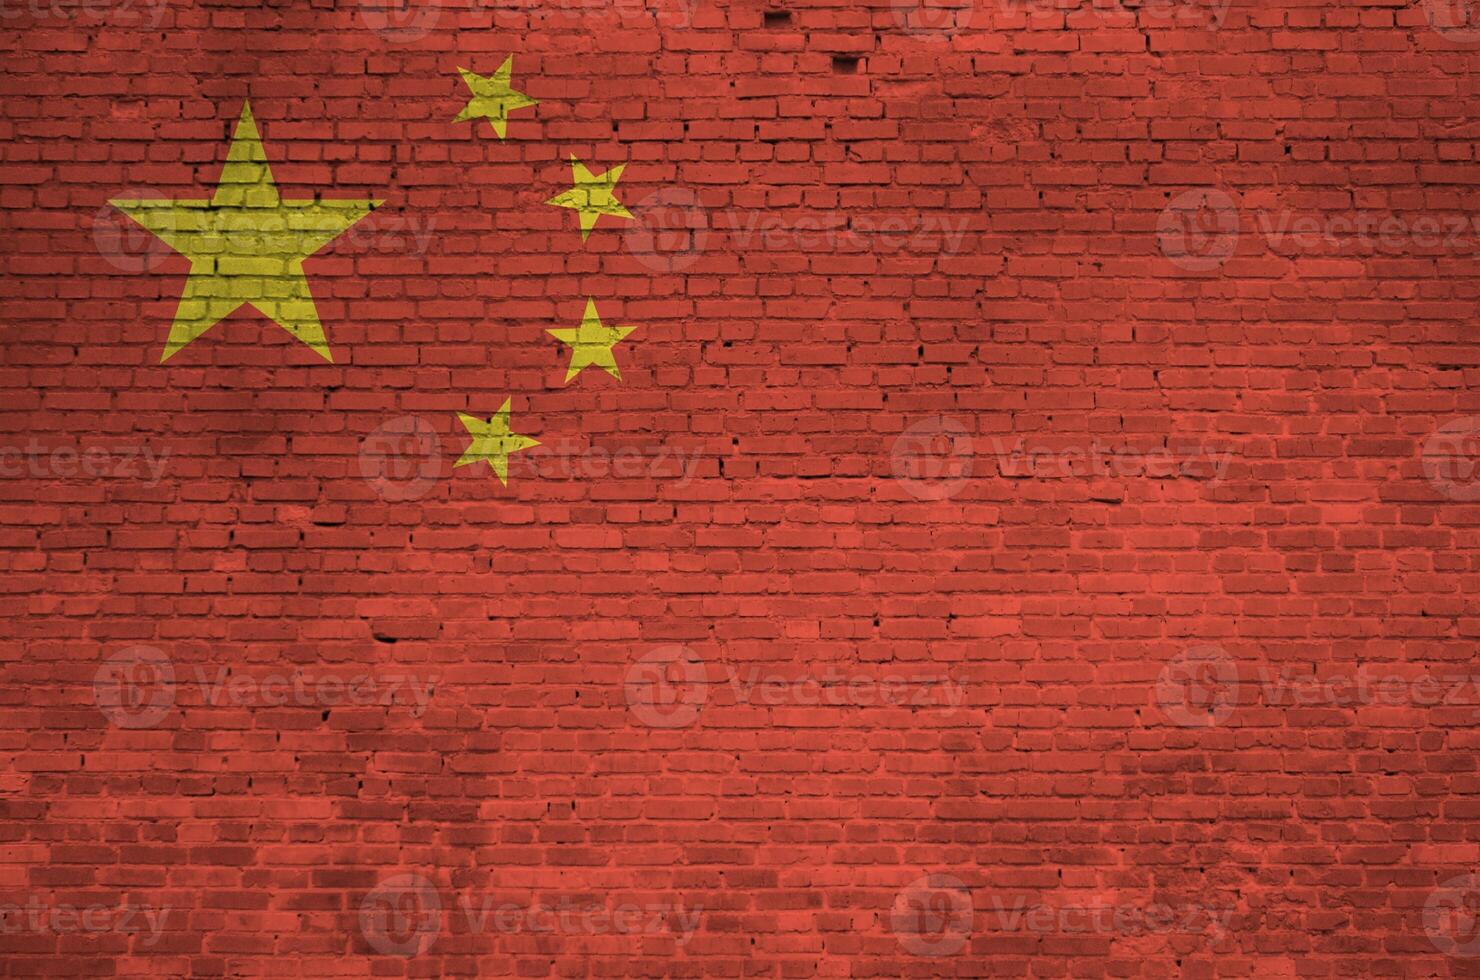 China vlag afgebeeld in verf kleuren Aan oud steen muur. getextureerde banier Aan groot steen muur metselwerk achtergrond foto